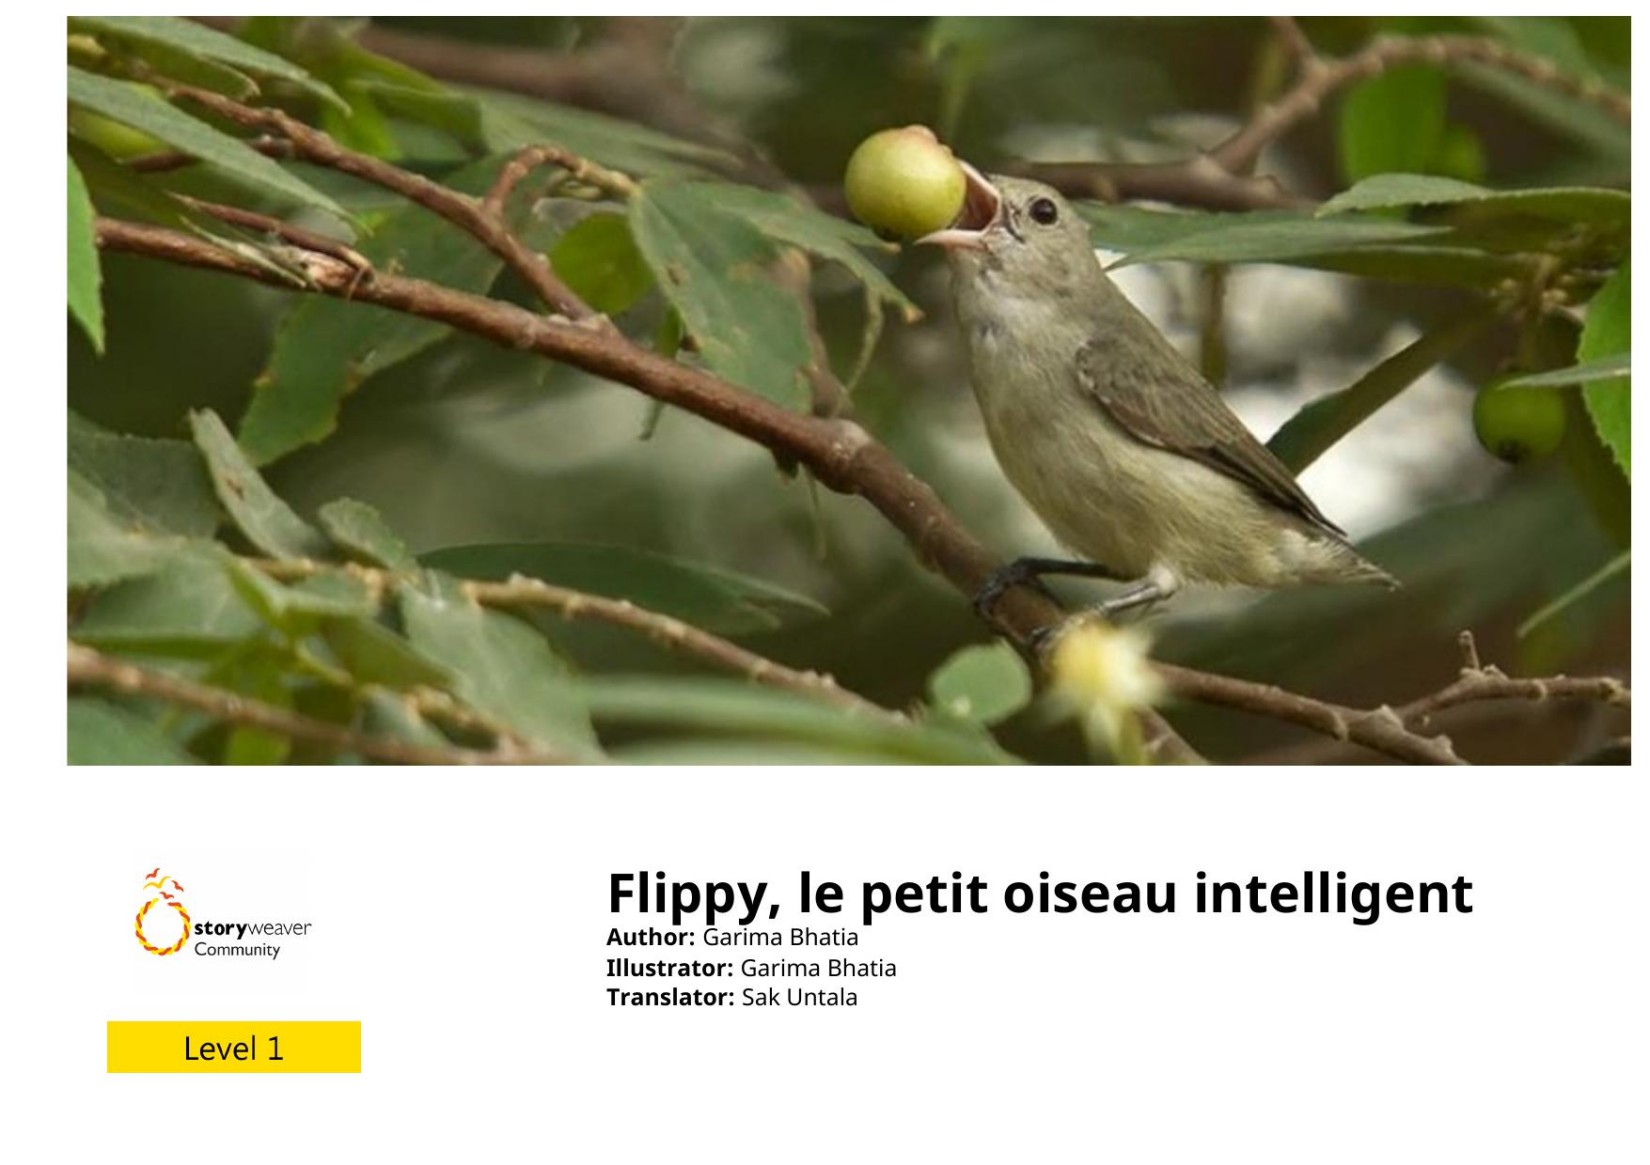 Flippy, le petit oiseau intelligent